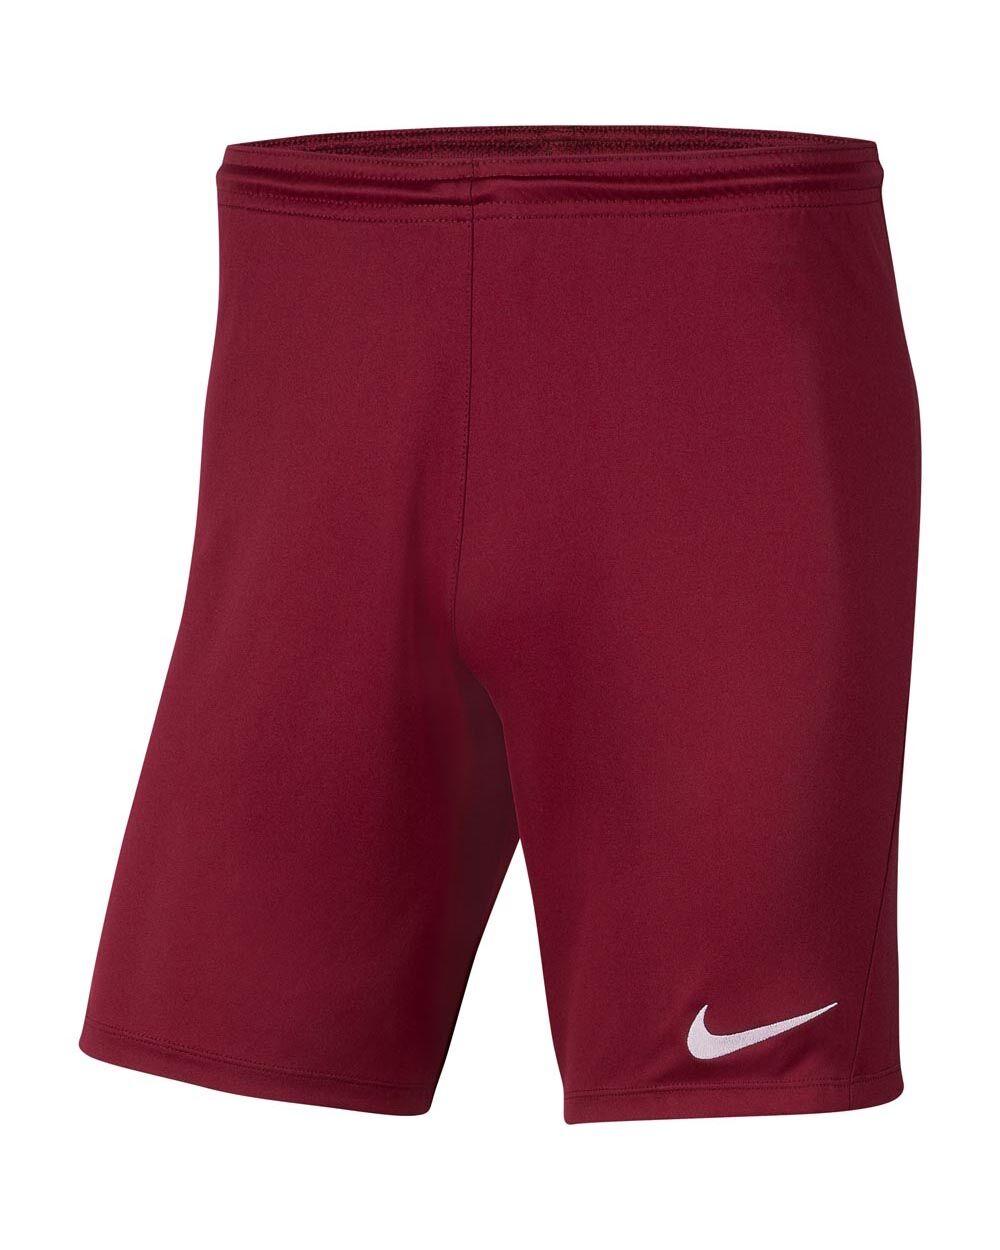 Pantalón corto Nike Park III Burdeos Hombre - BV6855-677